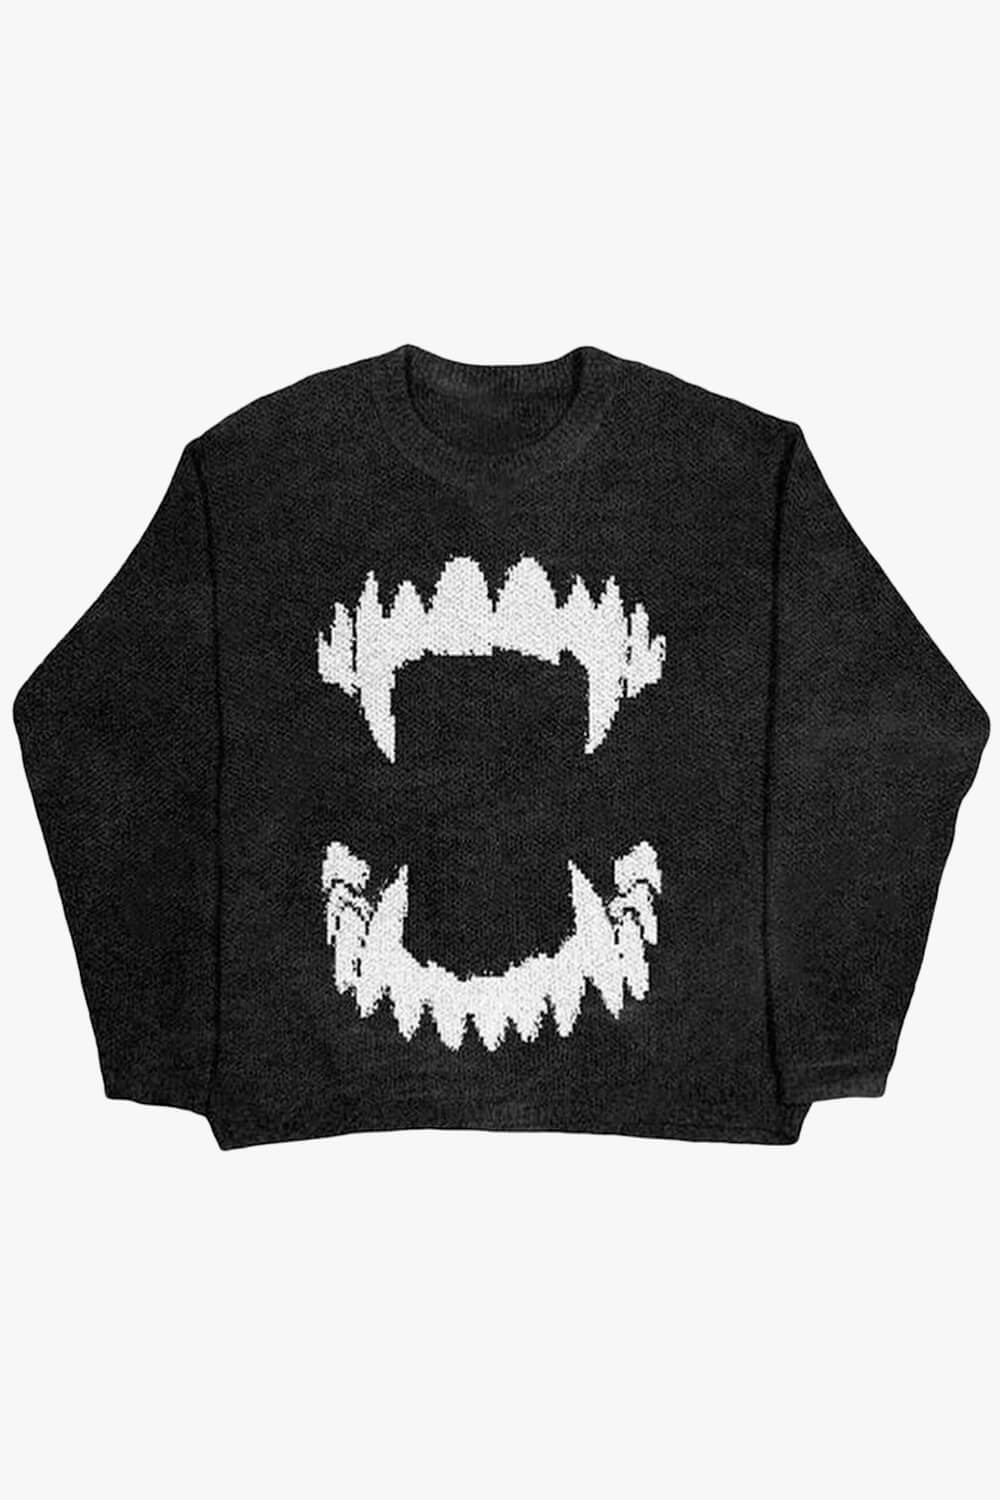 Vampire Teeth Sweater Oversized Horror Aesthetic